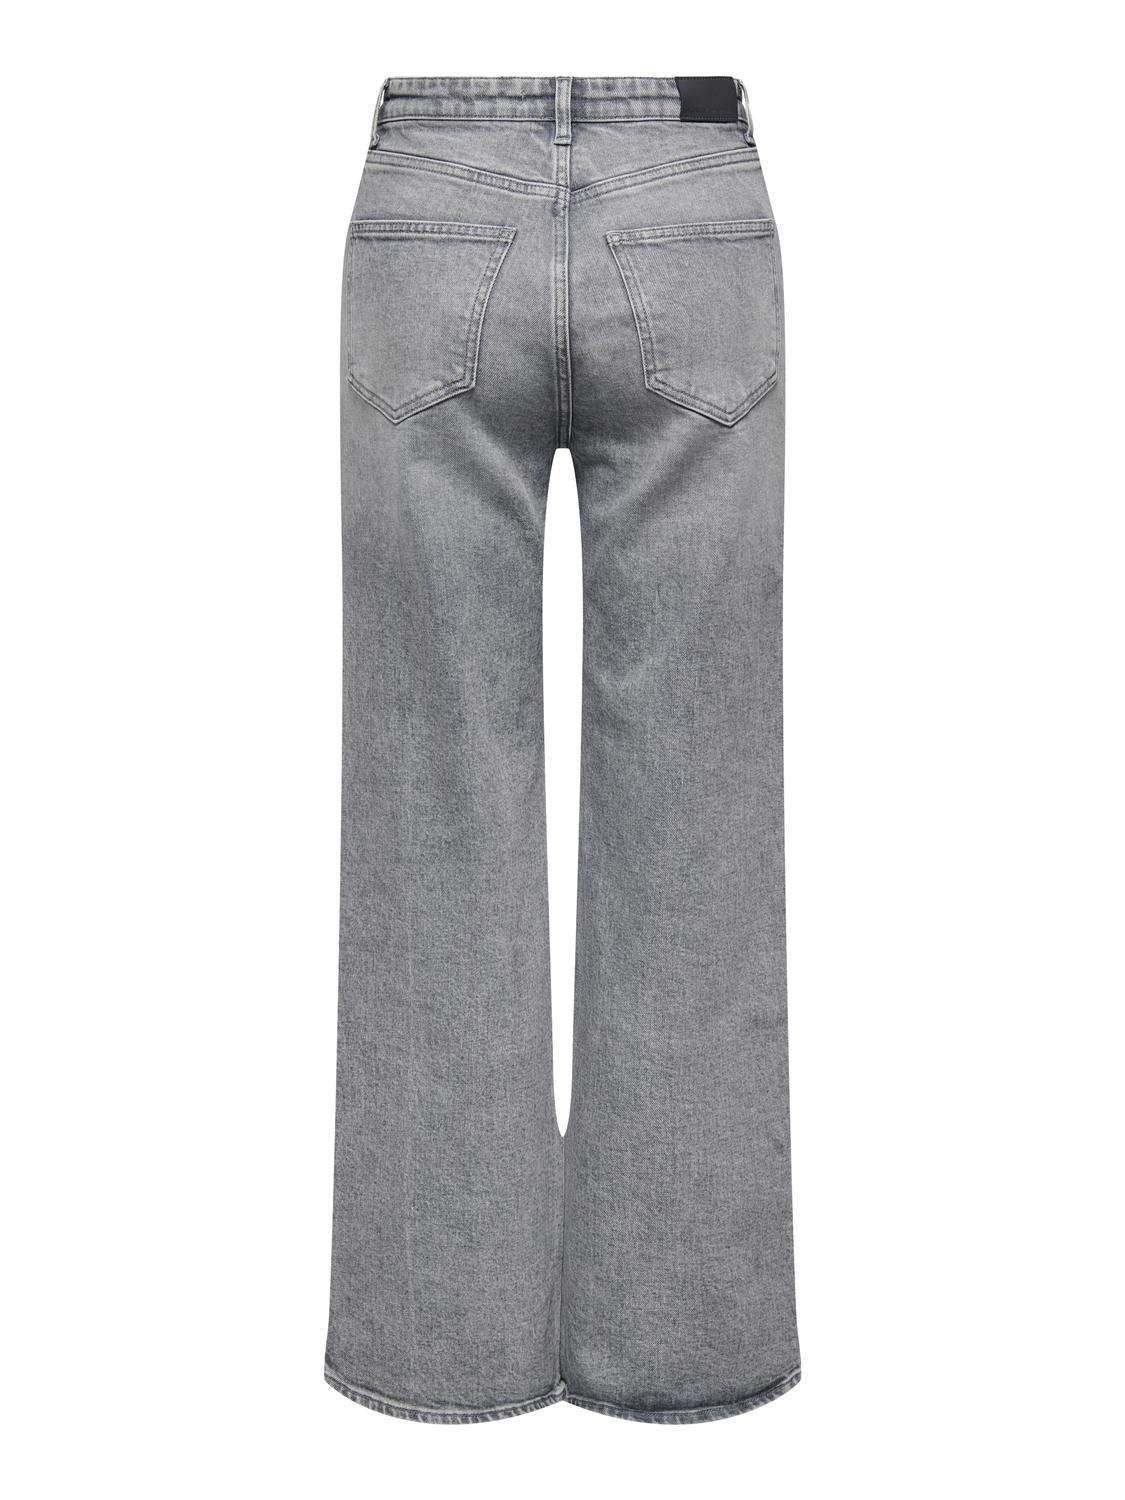 ONLJUICY Jeans - Medium Grey Denim